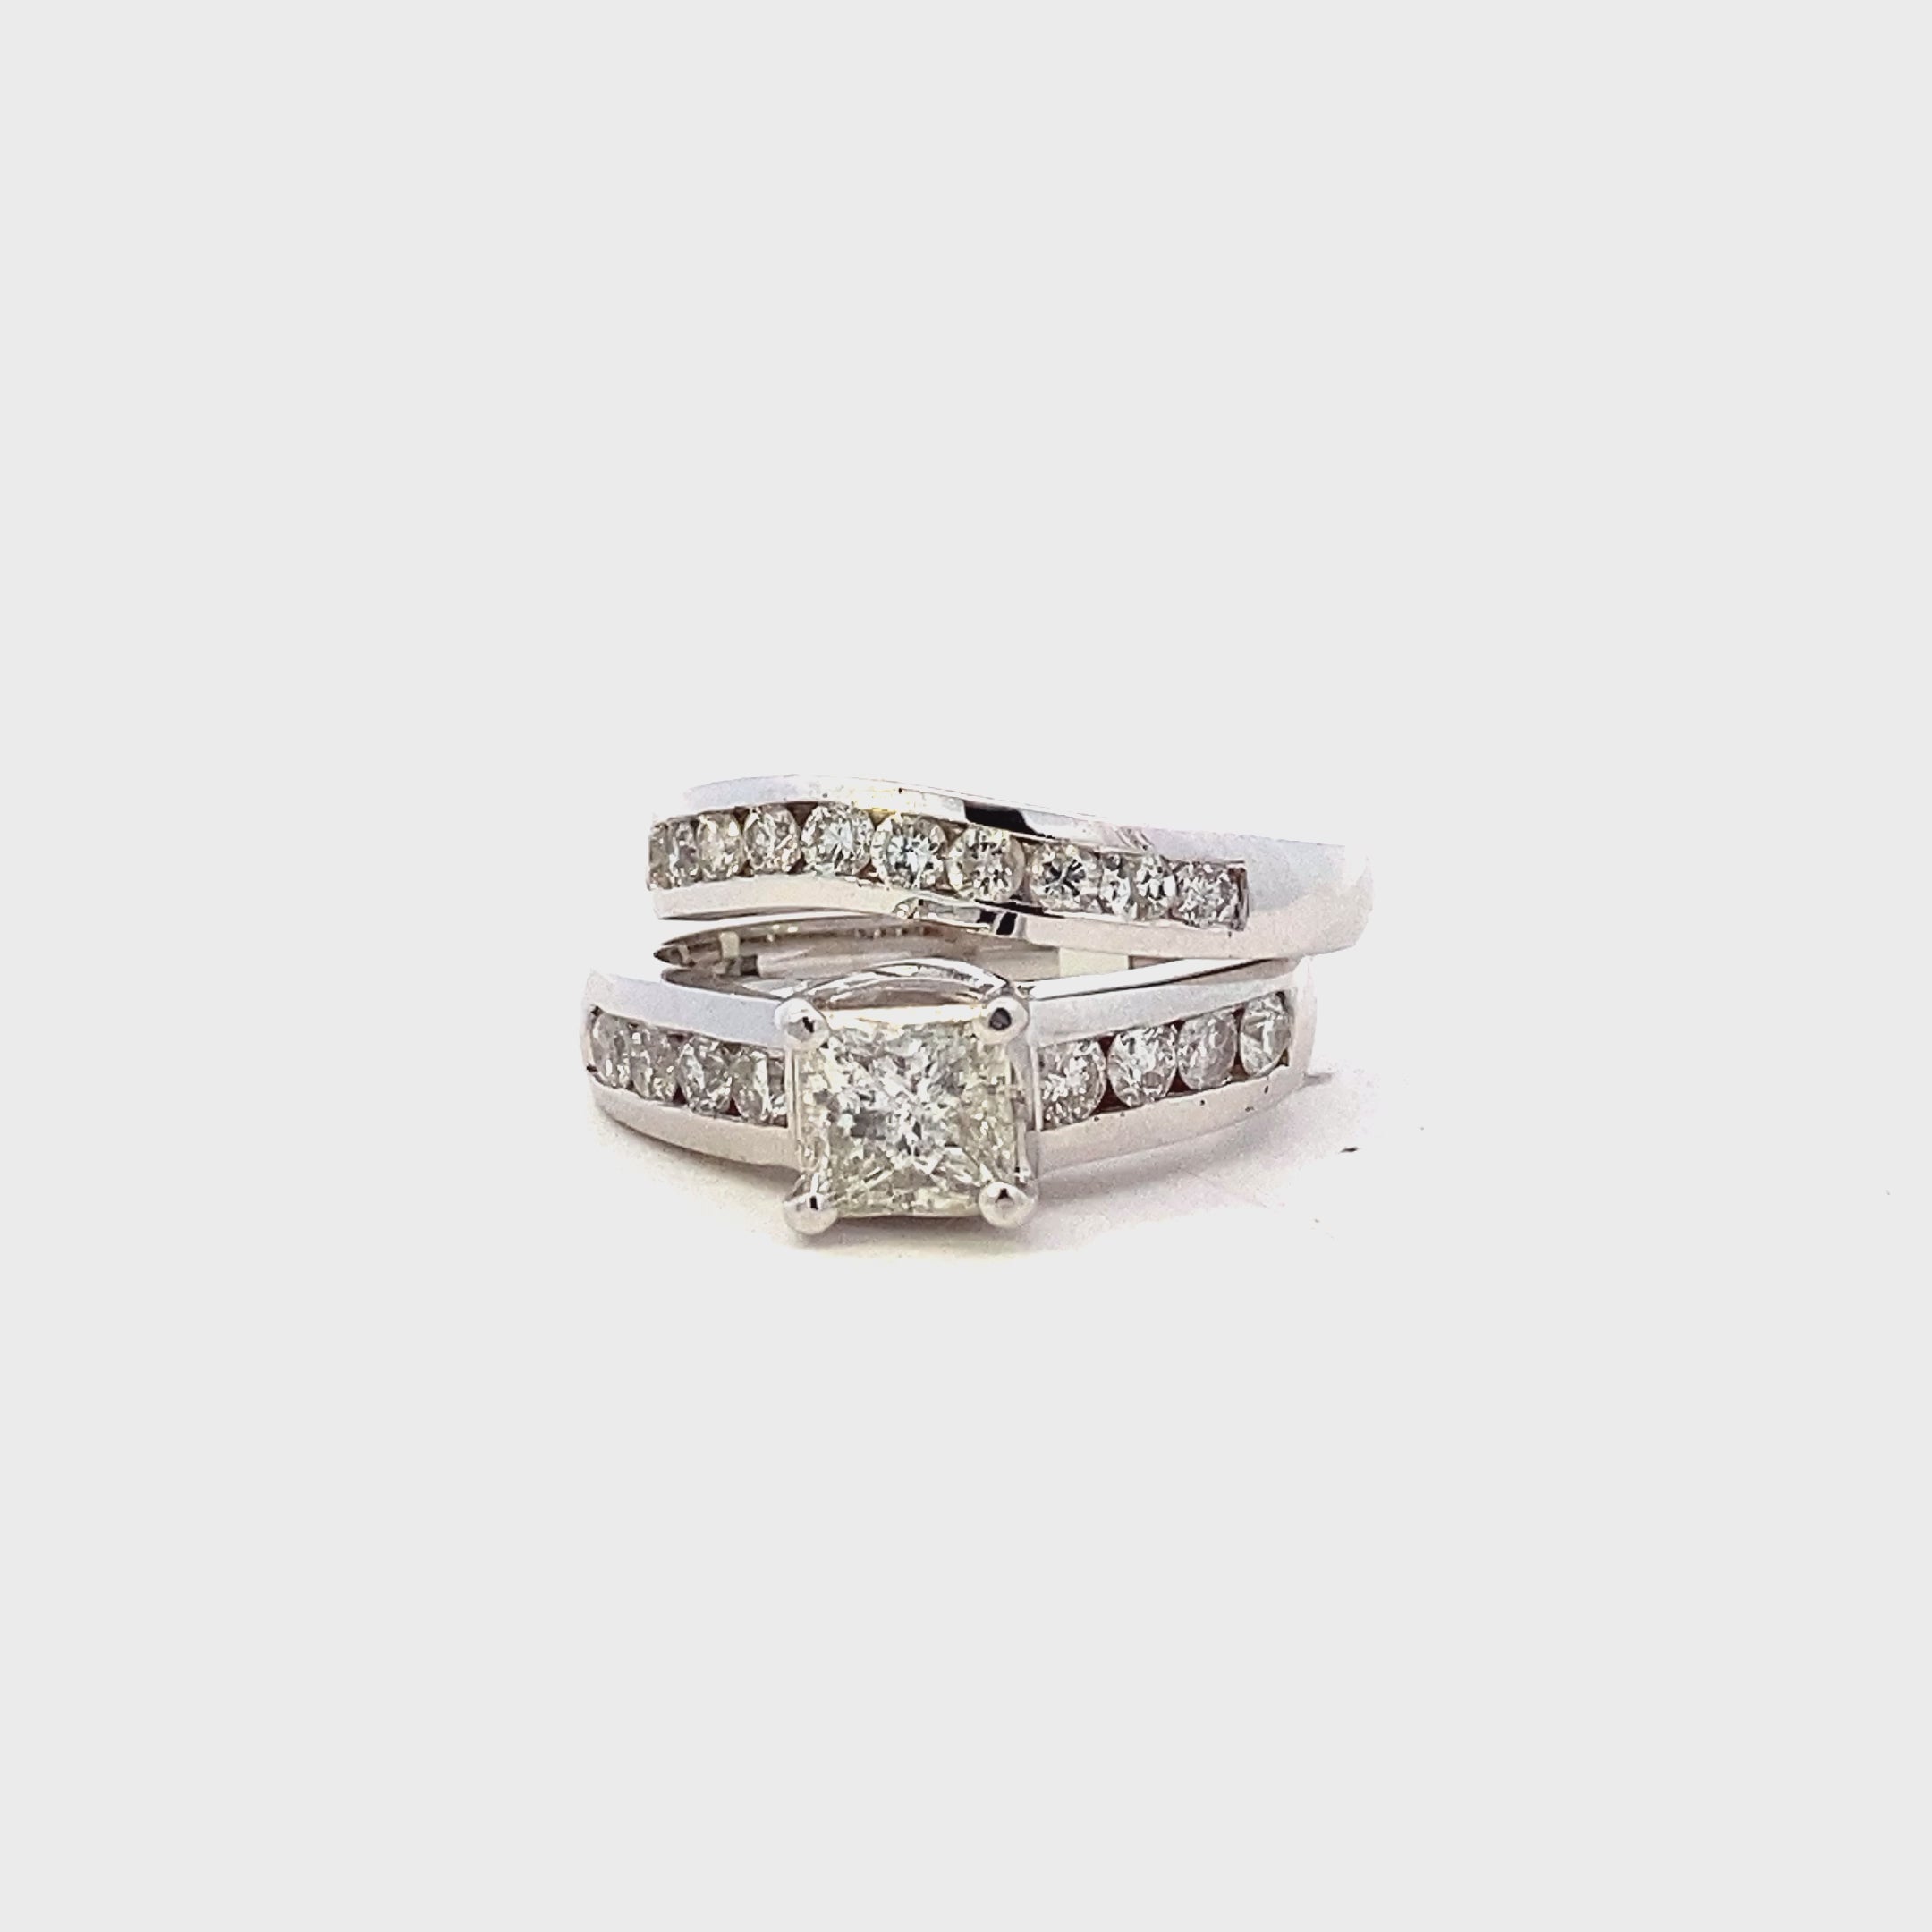 14K White Gold Diamond Engagement & Wedding Ring Set - 1.84ct